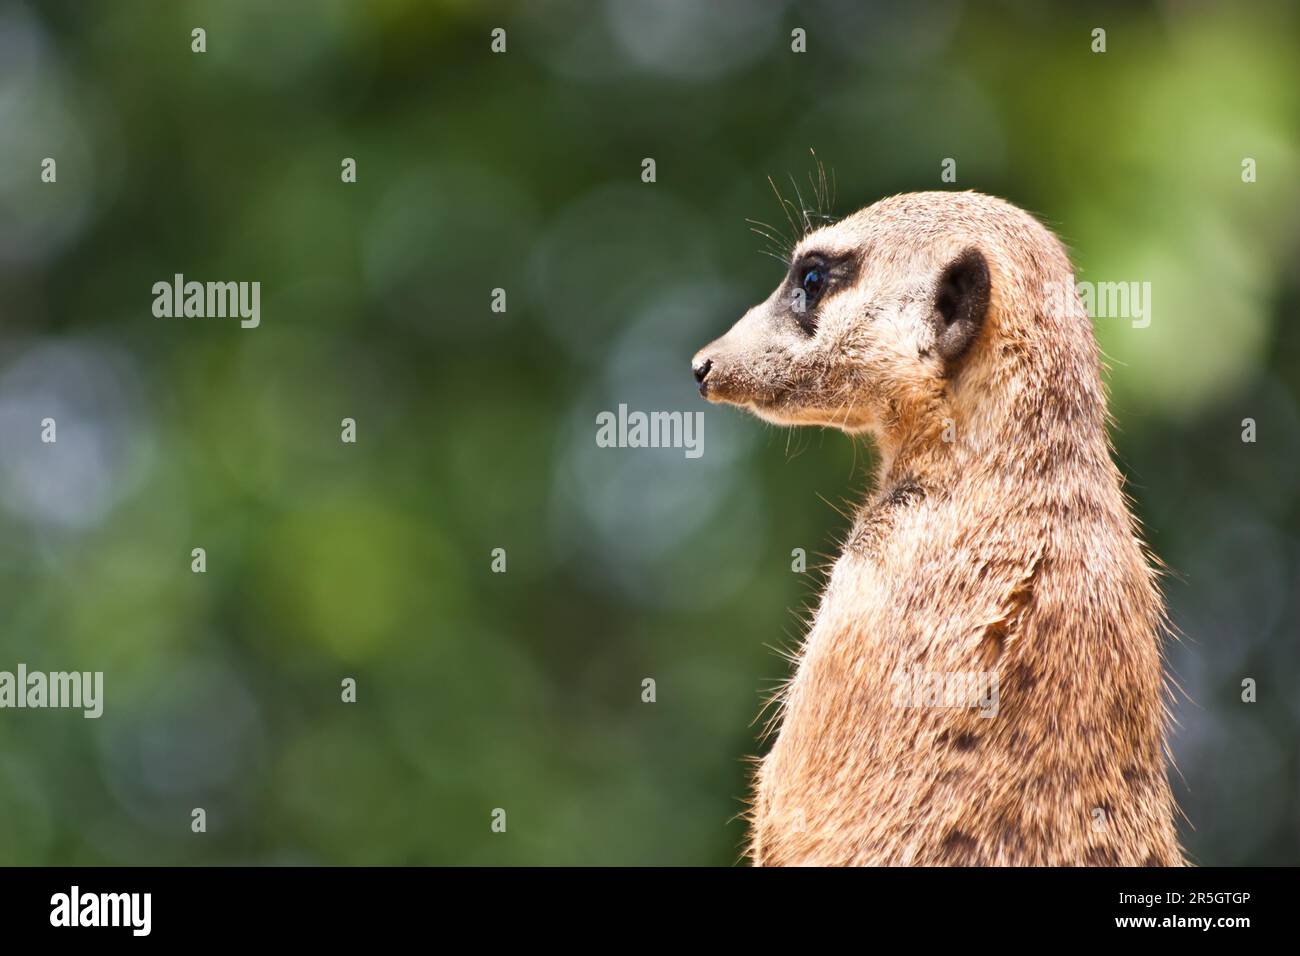 The meerkat or suricate (Suricata suricatta), is a small mammal belonging to the mongoose family Stock Photo